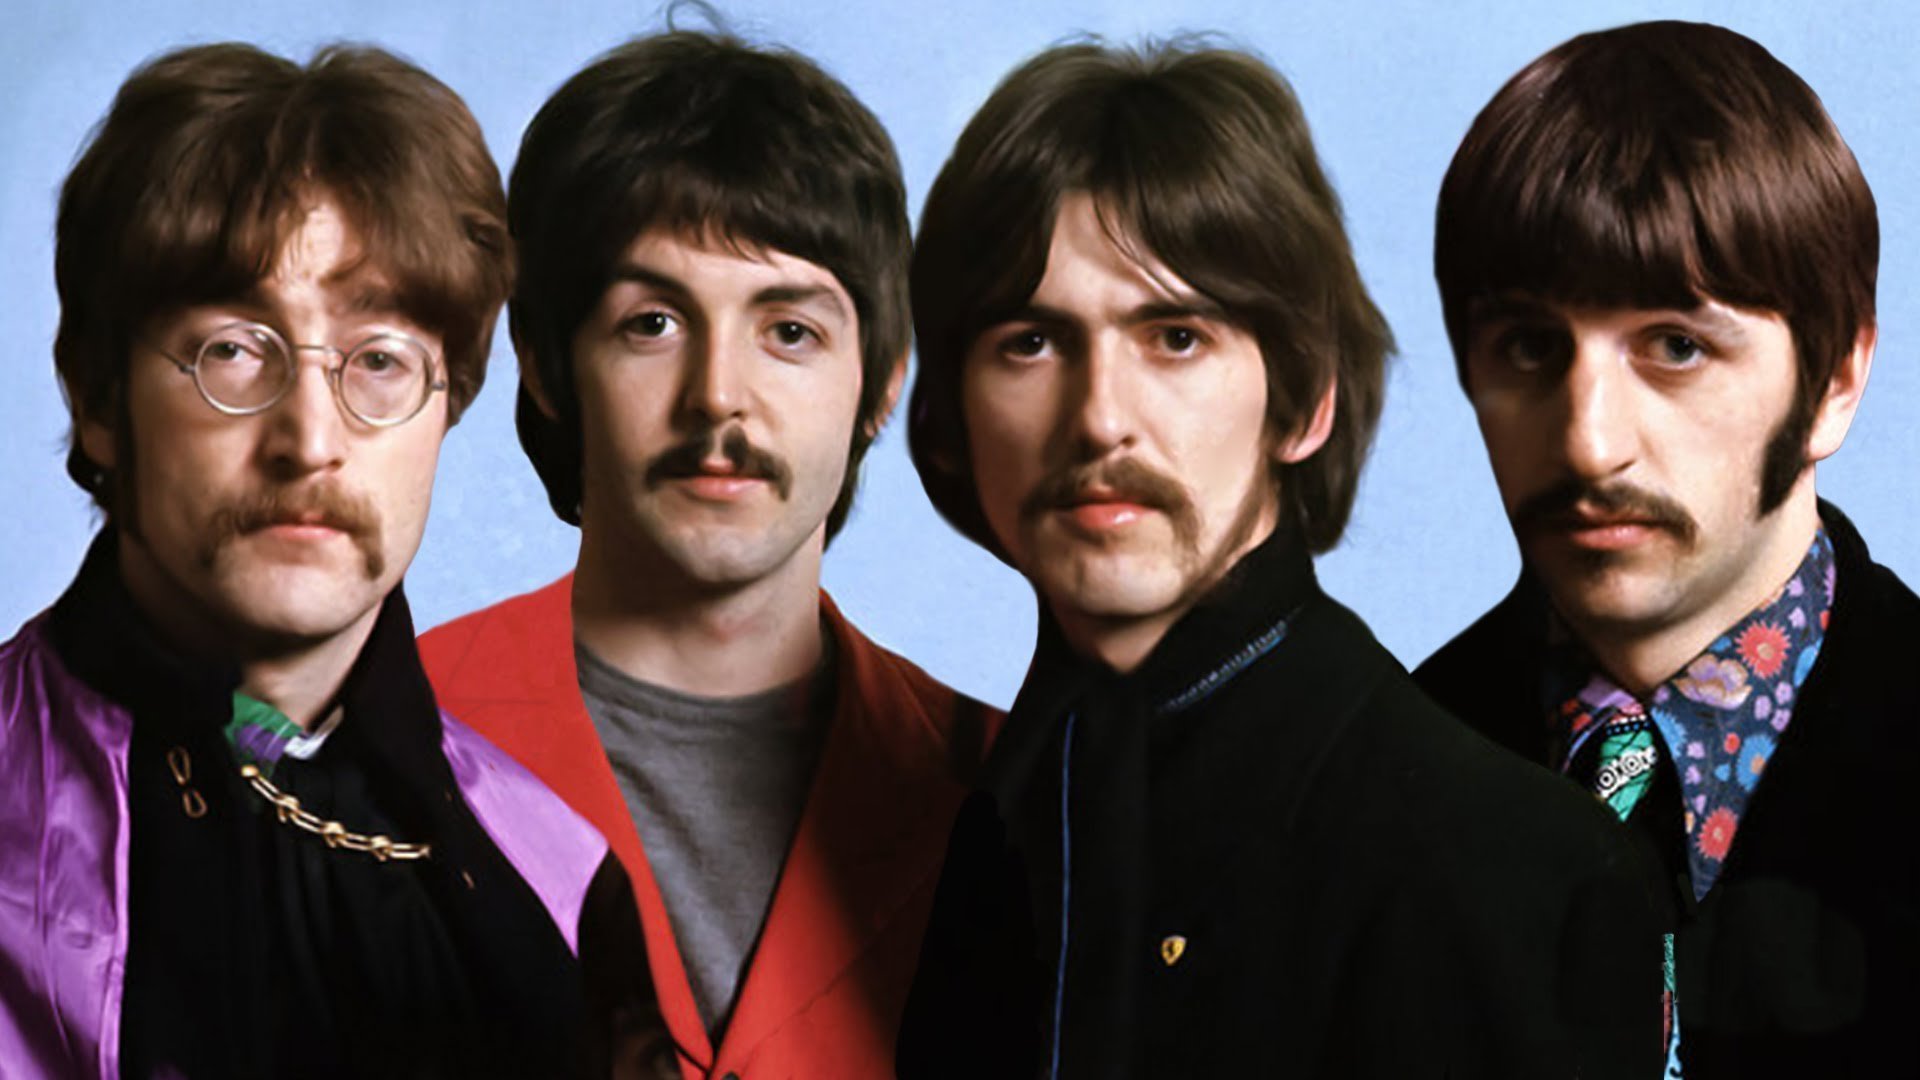 Free download The Beatles  wallpaper  ID 271301 full hd  